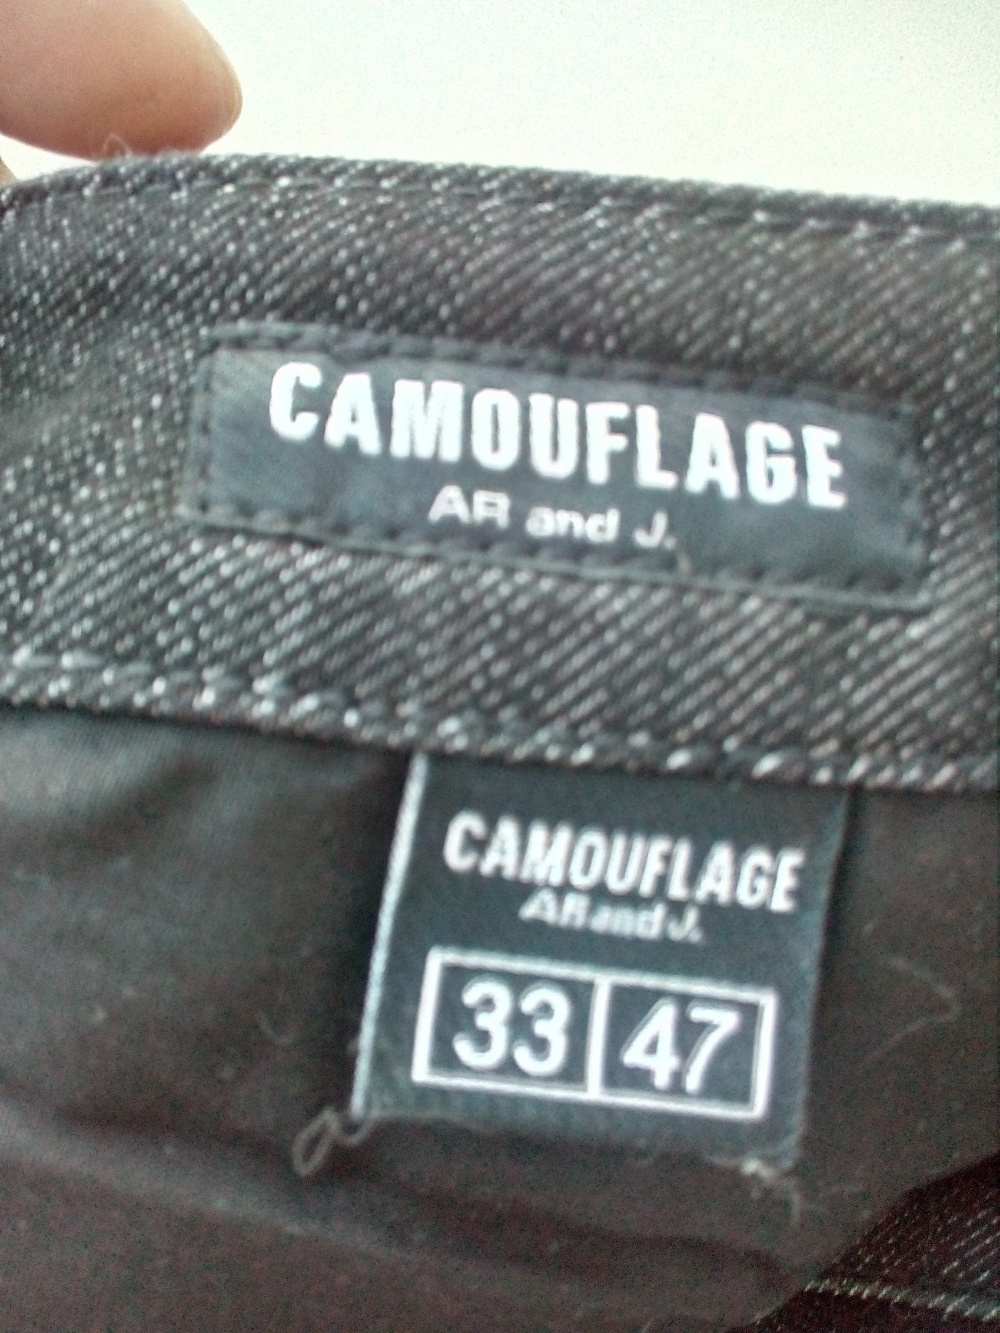 Джинсы Camouflage AR and J., размер 46—48